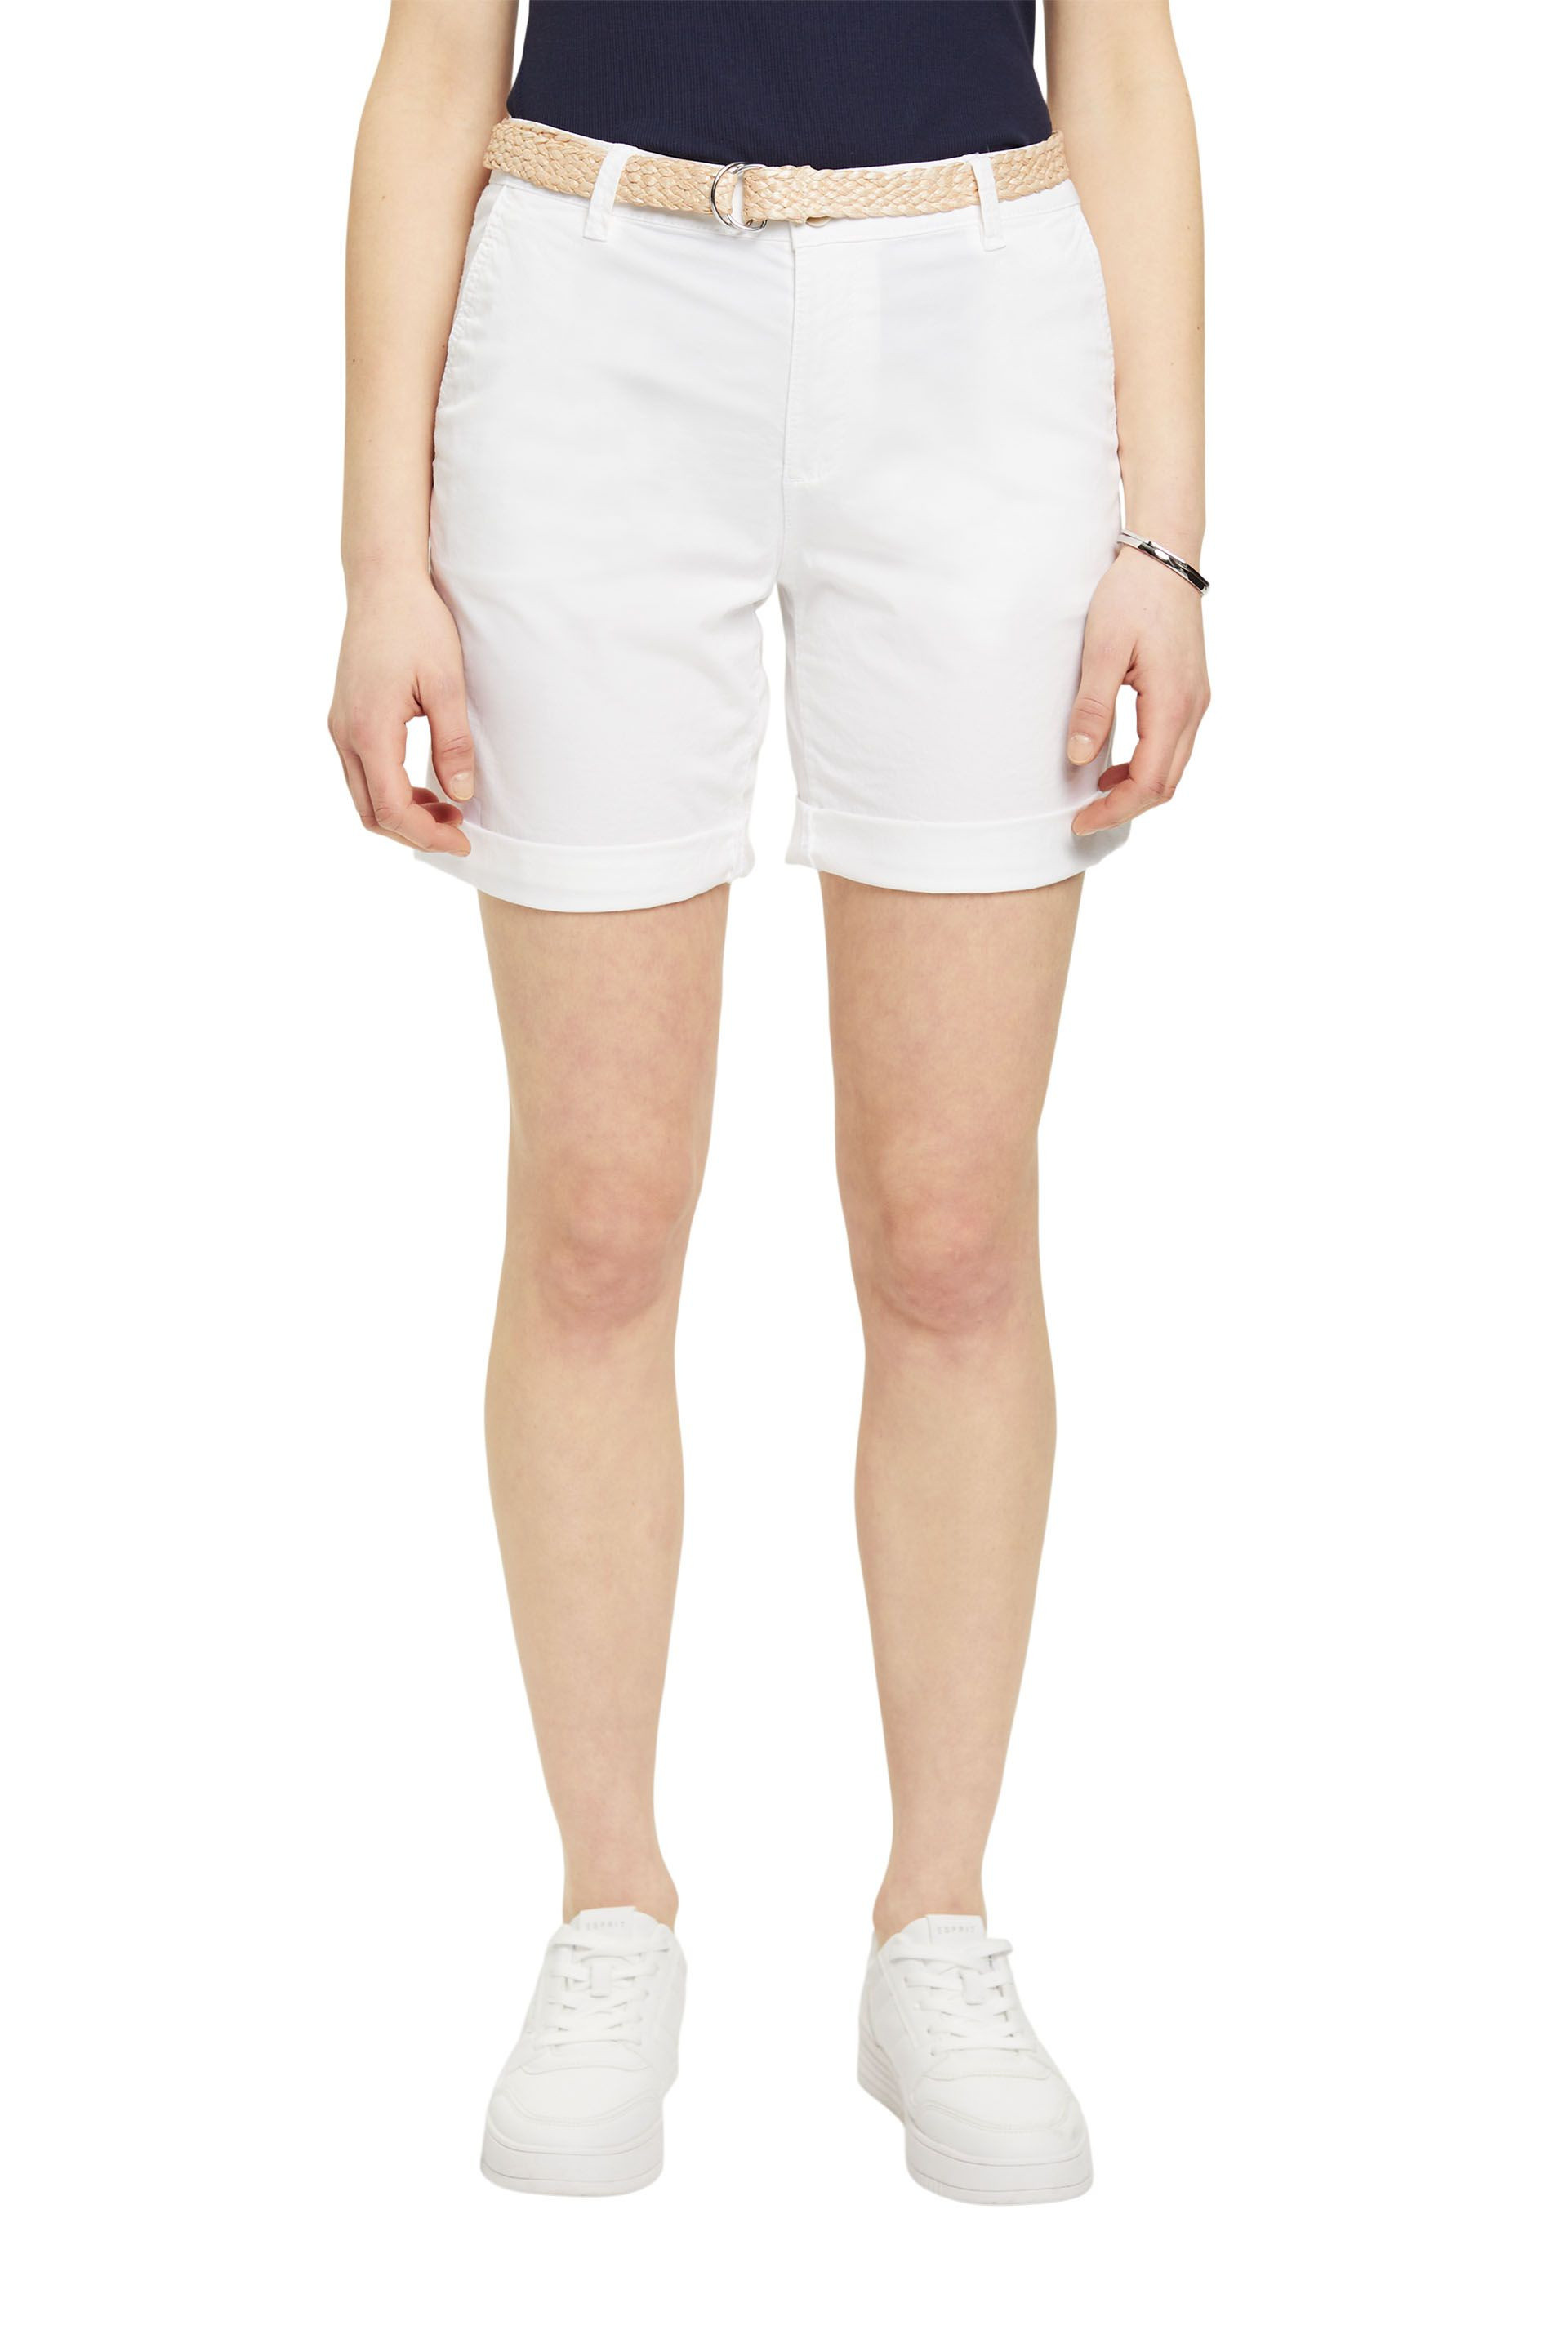 Esprit - Shorts con cintura intrecciata in rafia, Bianco, large image number 2